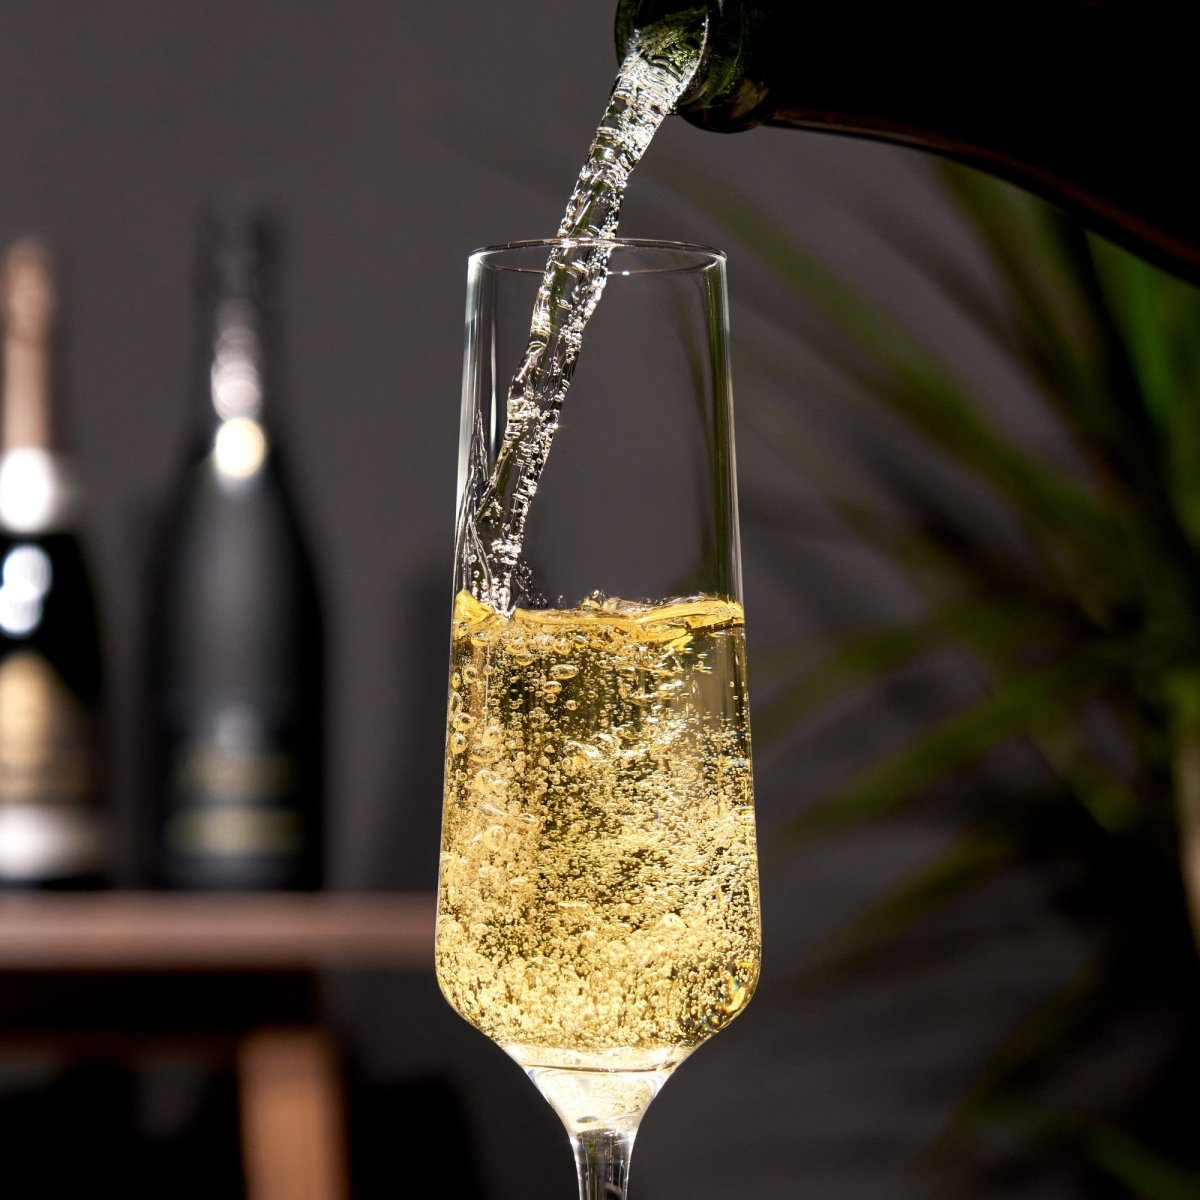 Genoa 12 oz. Lead-Free Crystal Champagne Flutes (Set of 4)